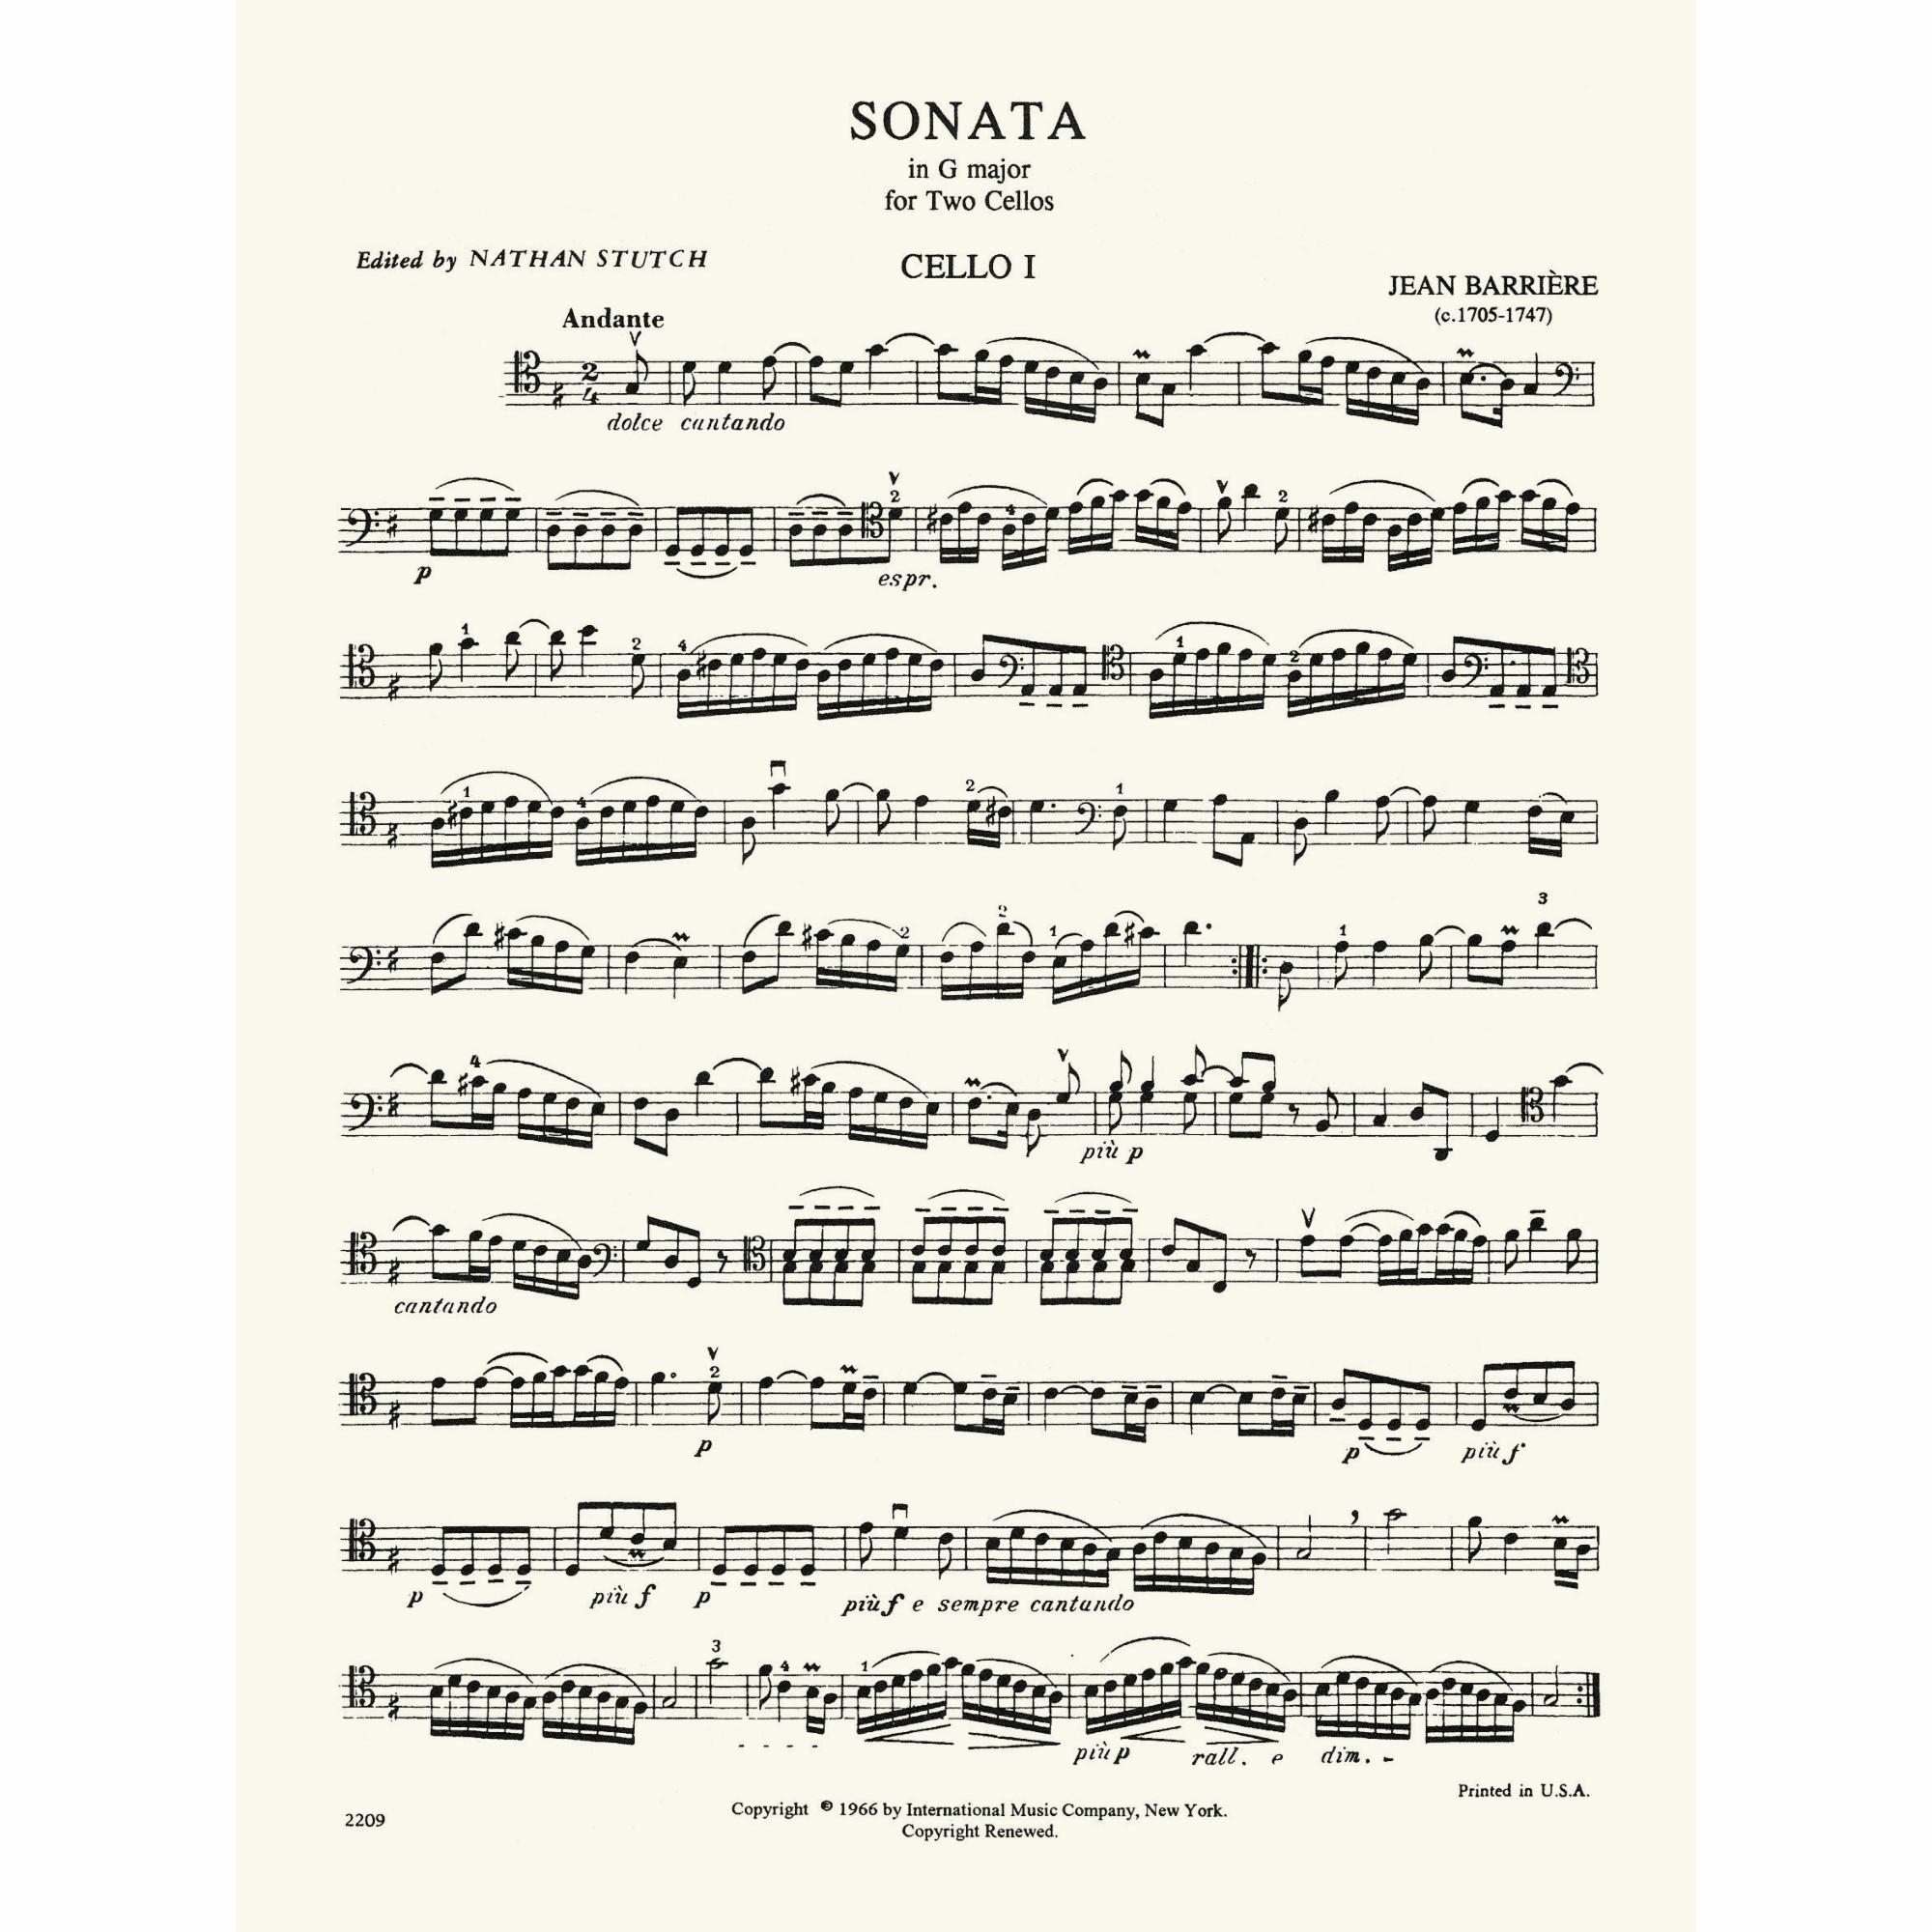 Sample: Cello I (Pg. 1)